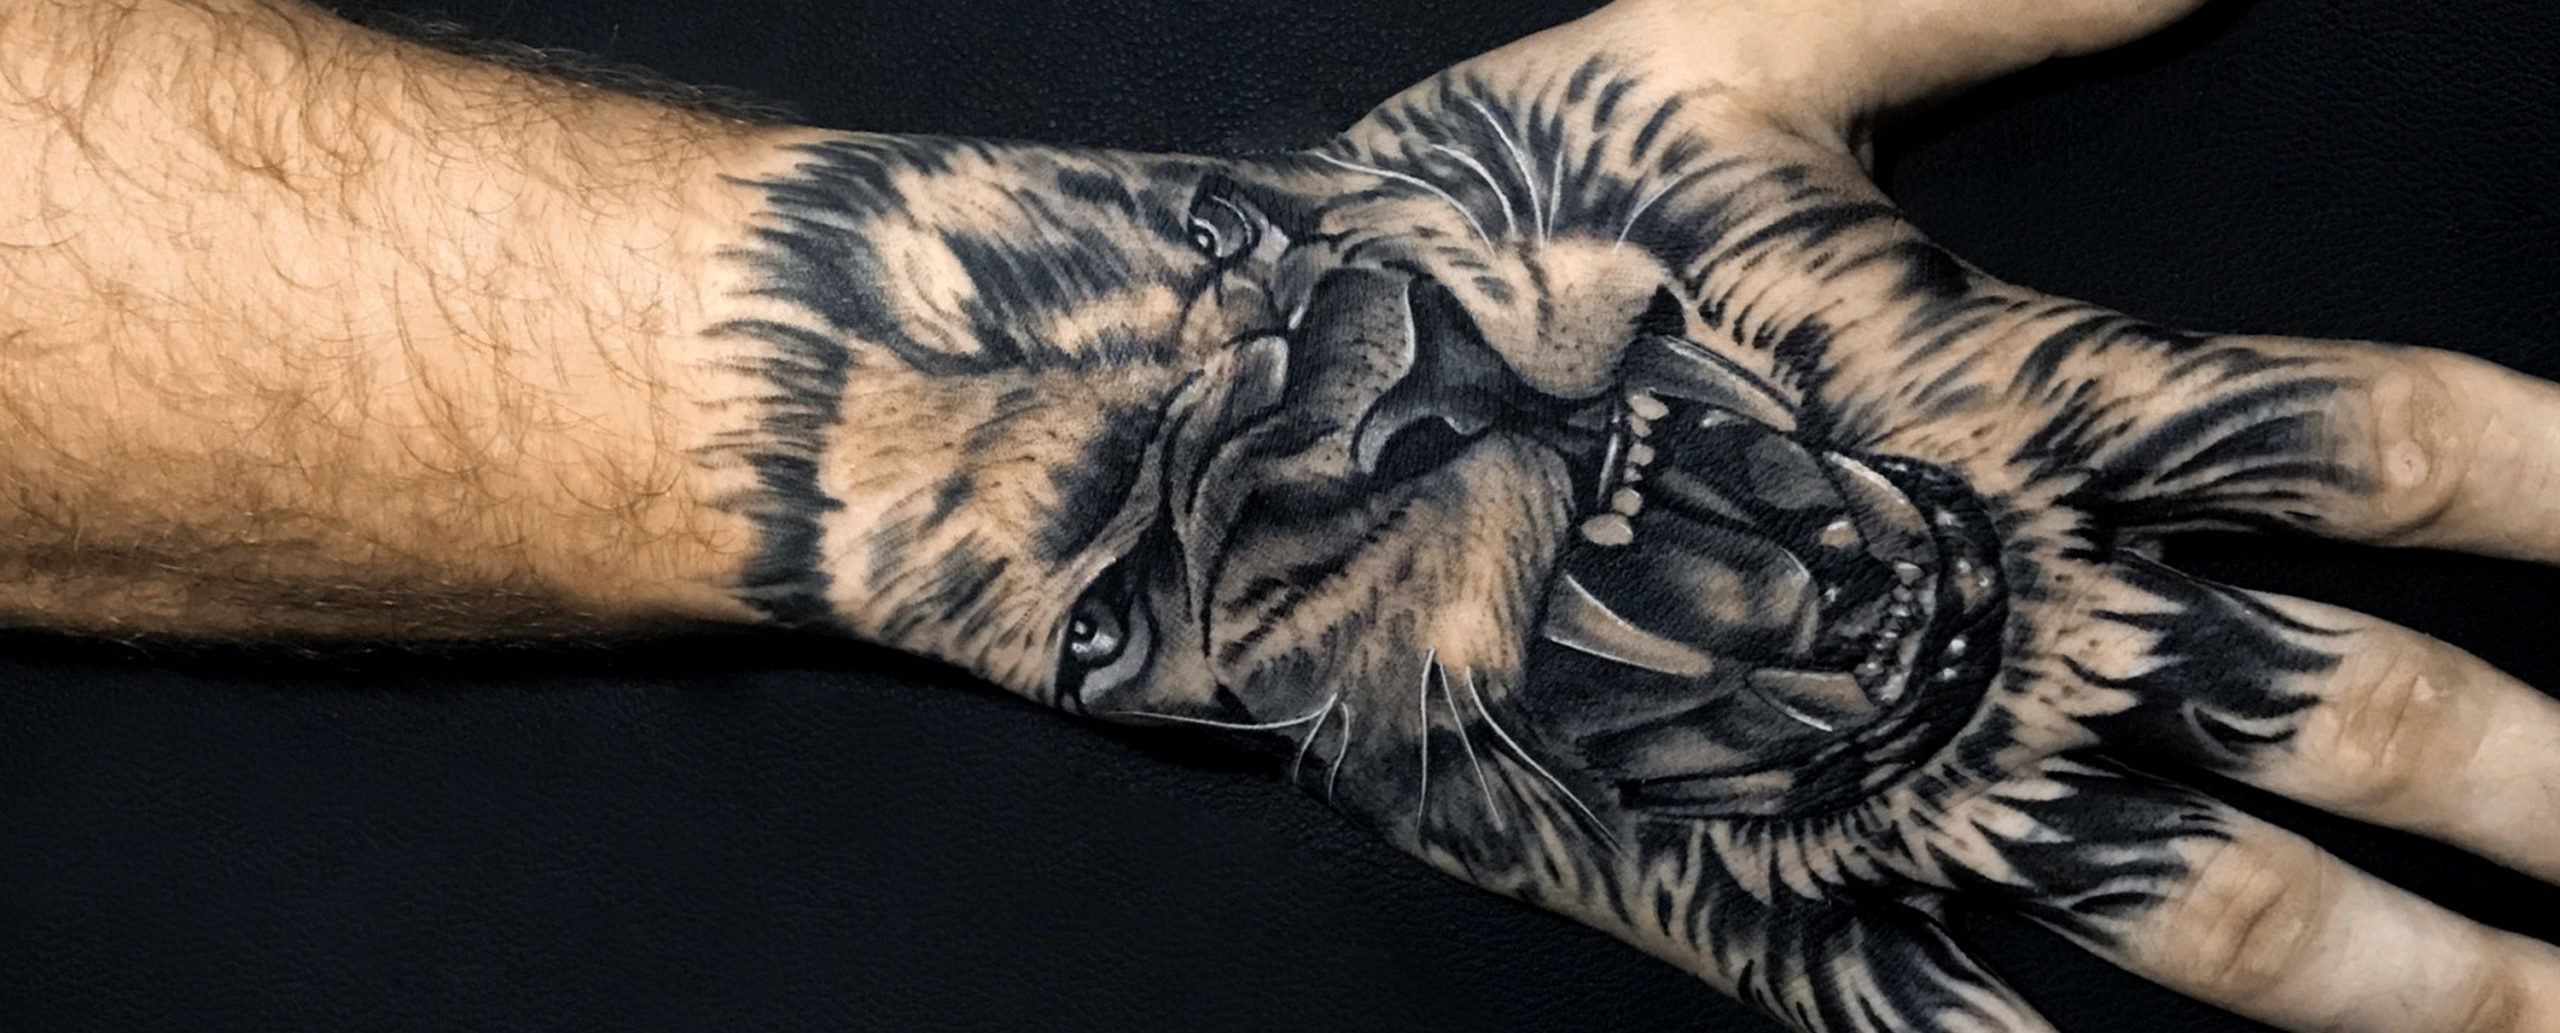 Tatuaje estilo black and grey